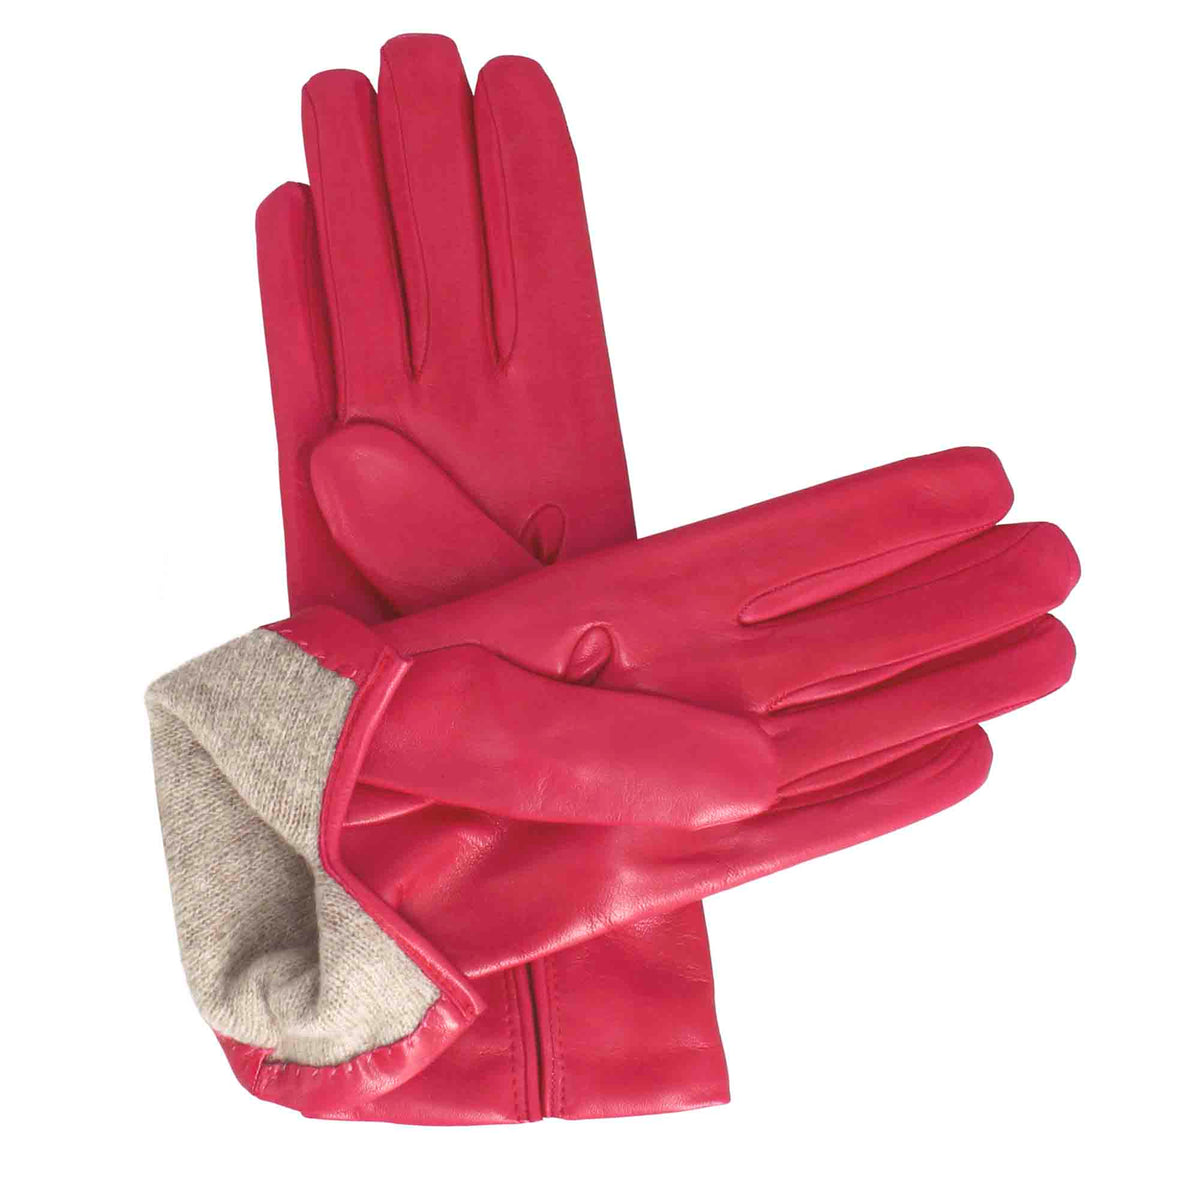 Forzieri Burgundy Leather Women's Gloves w/Cashmere Lining M